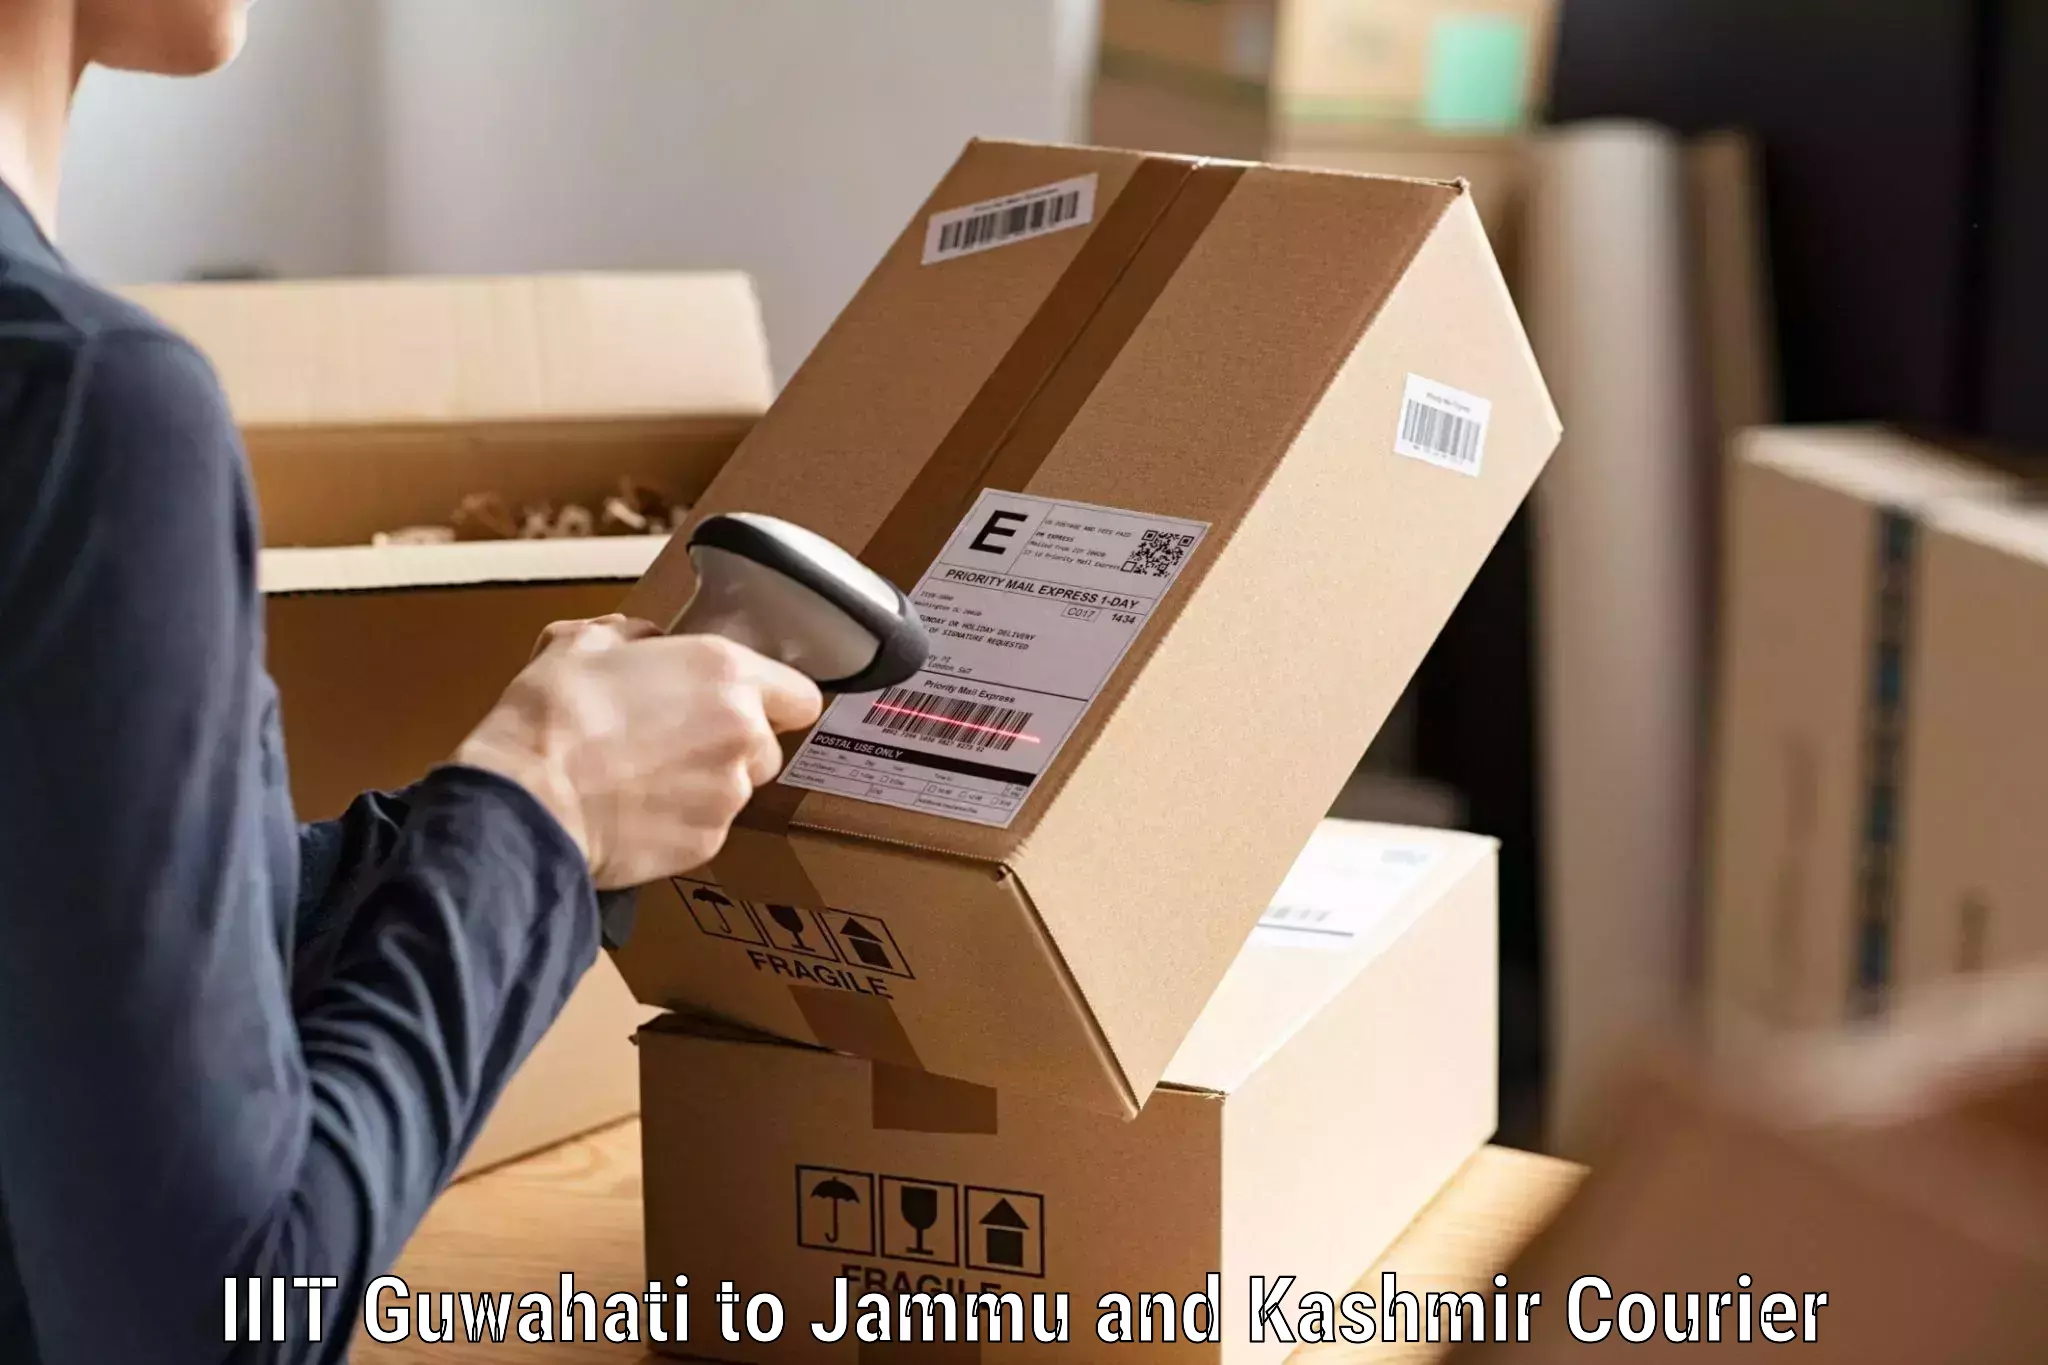 Courier service comparison IIIT Guwahati to Jammu